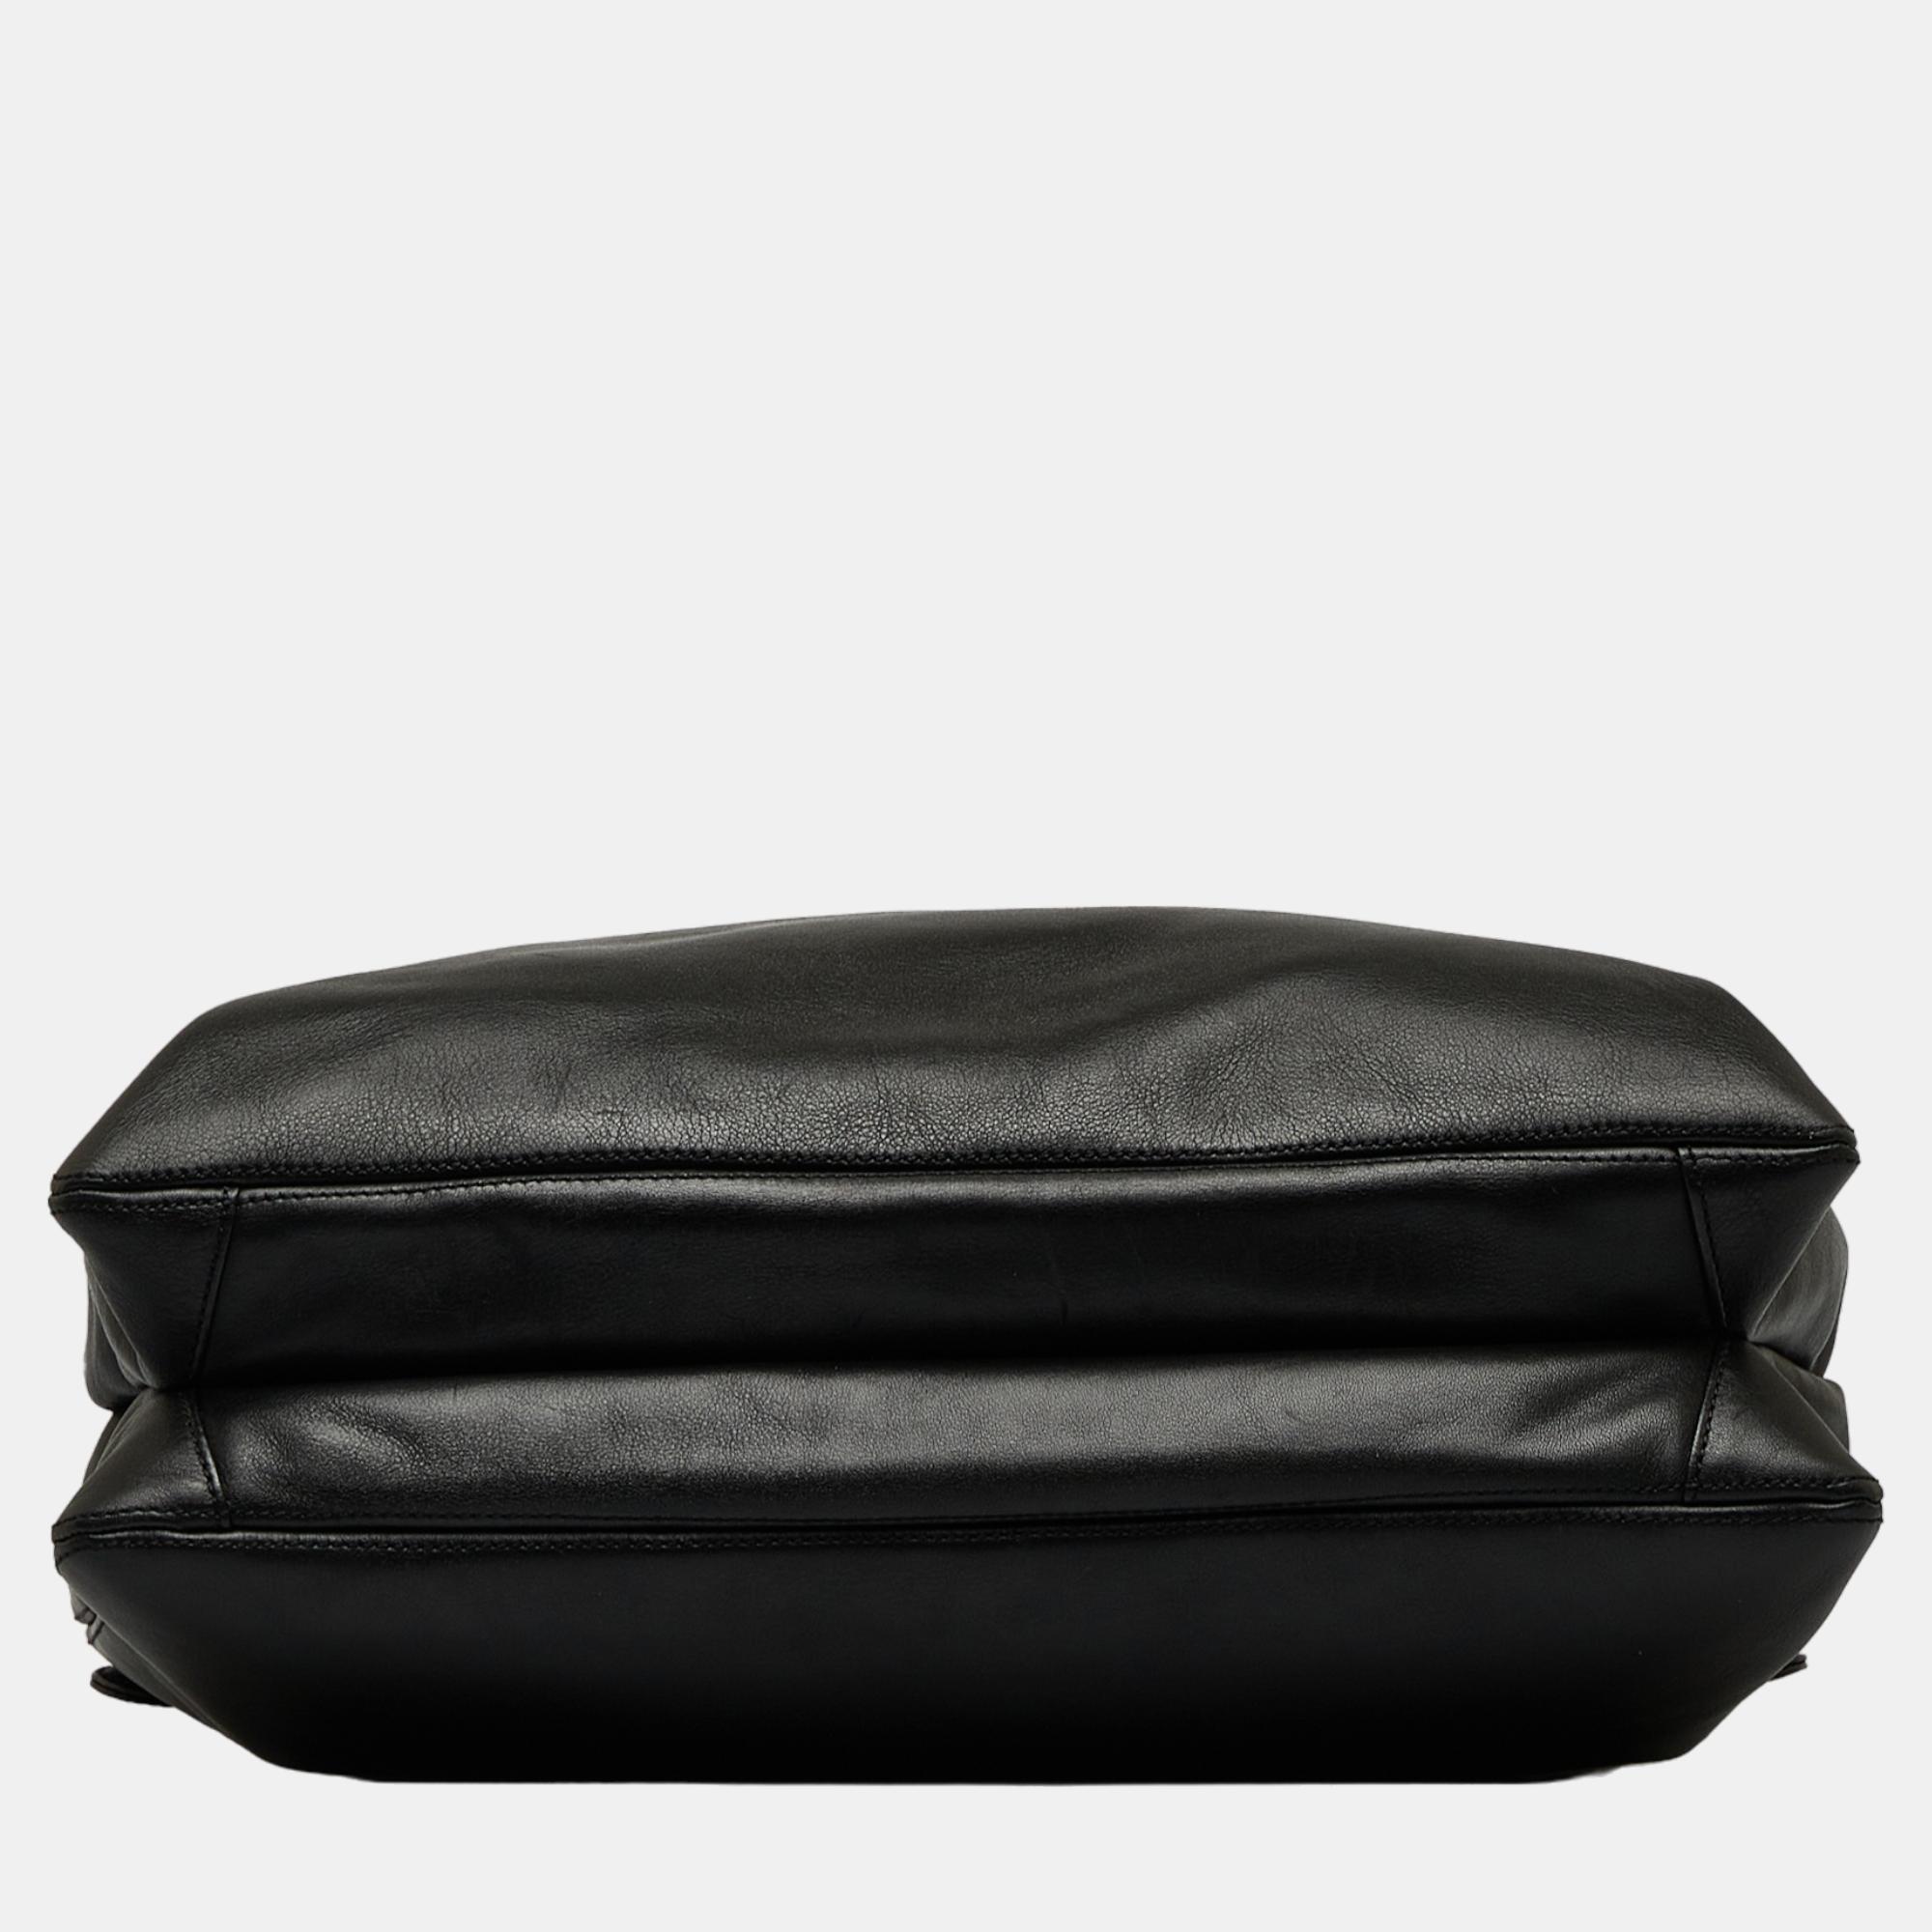 Chanel Black CC Lambskin Leather Tote Bag